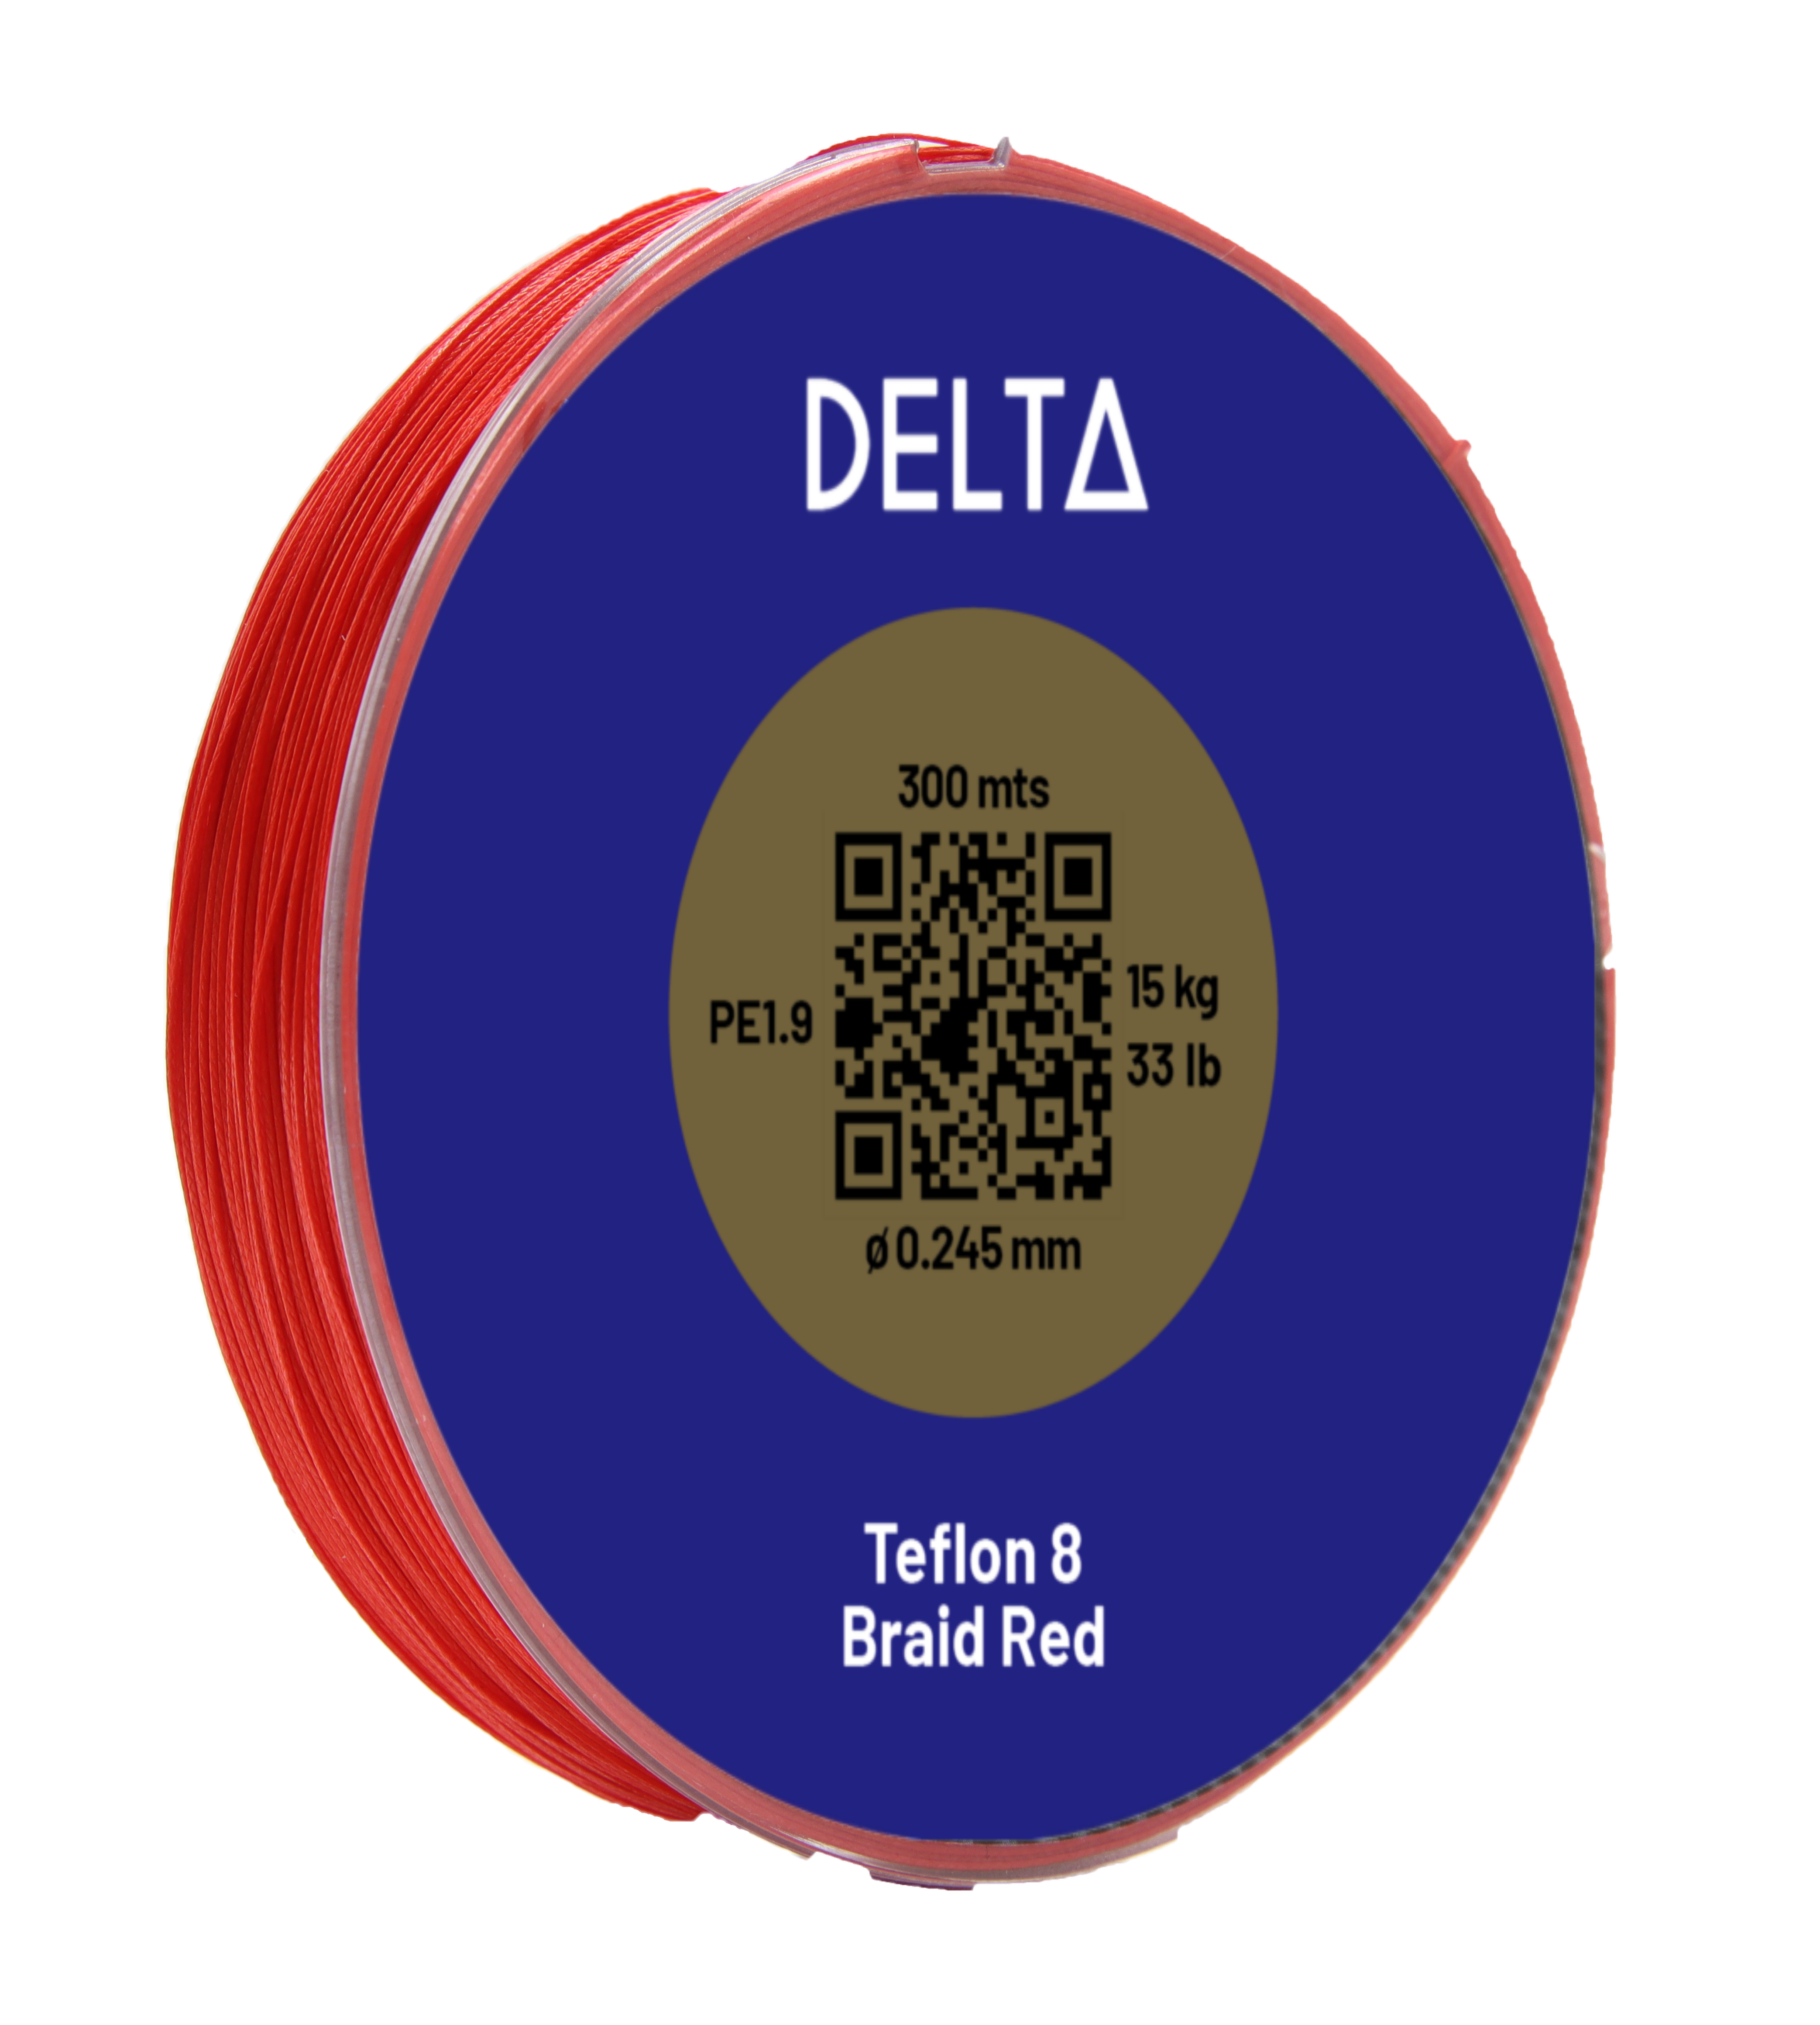 Delta network